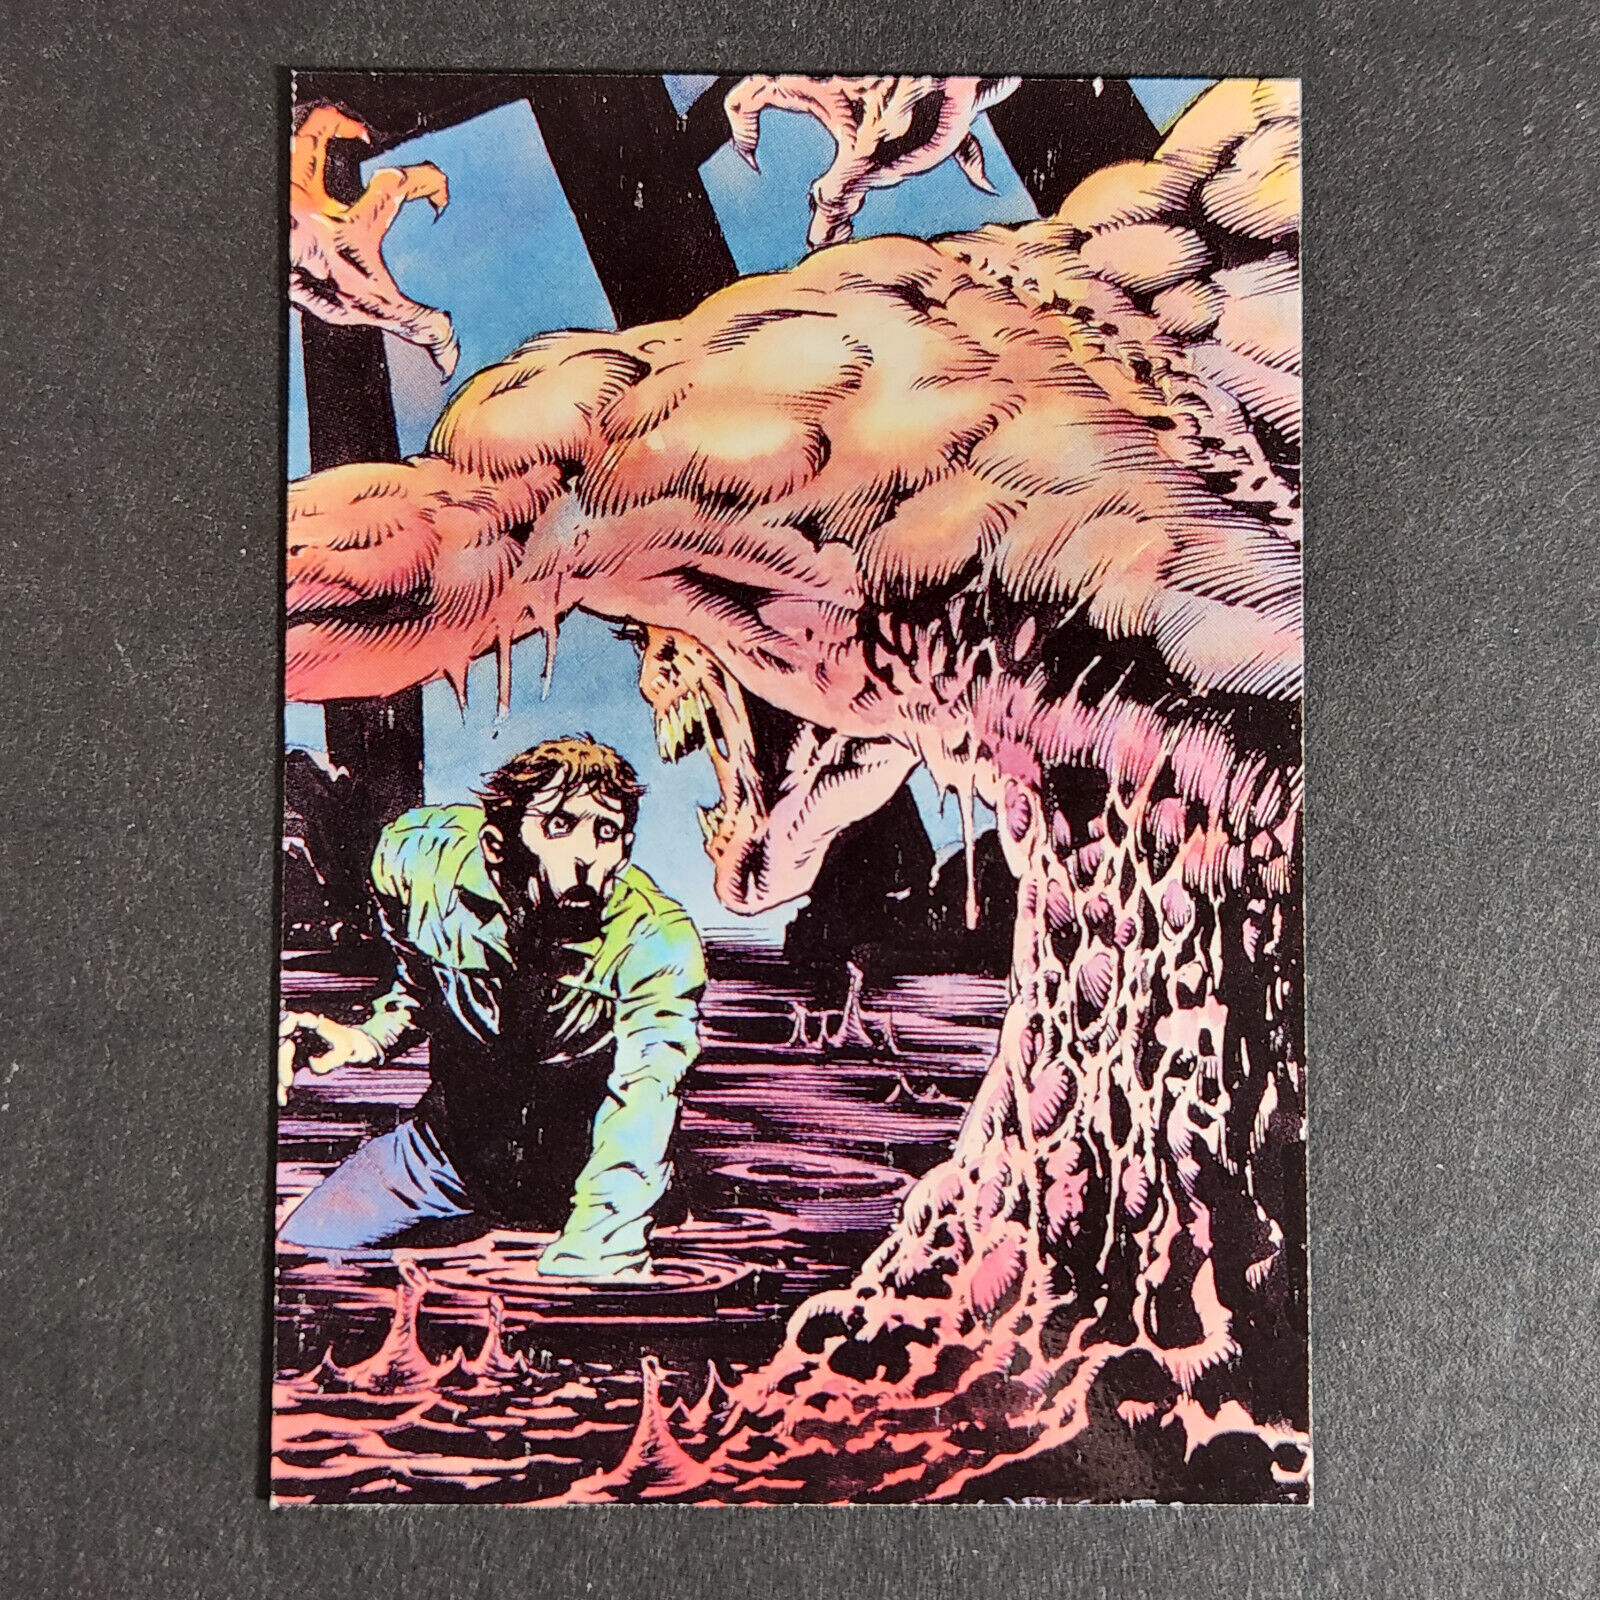 1992 Advance Comics Bernie Wrightson Promo Card